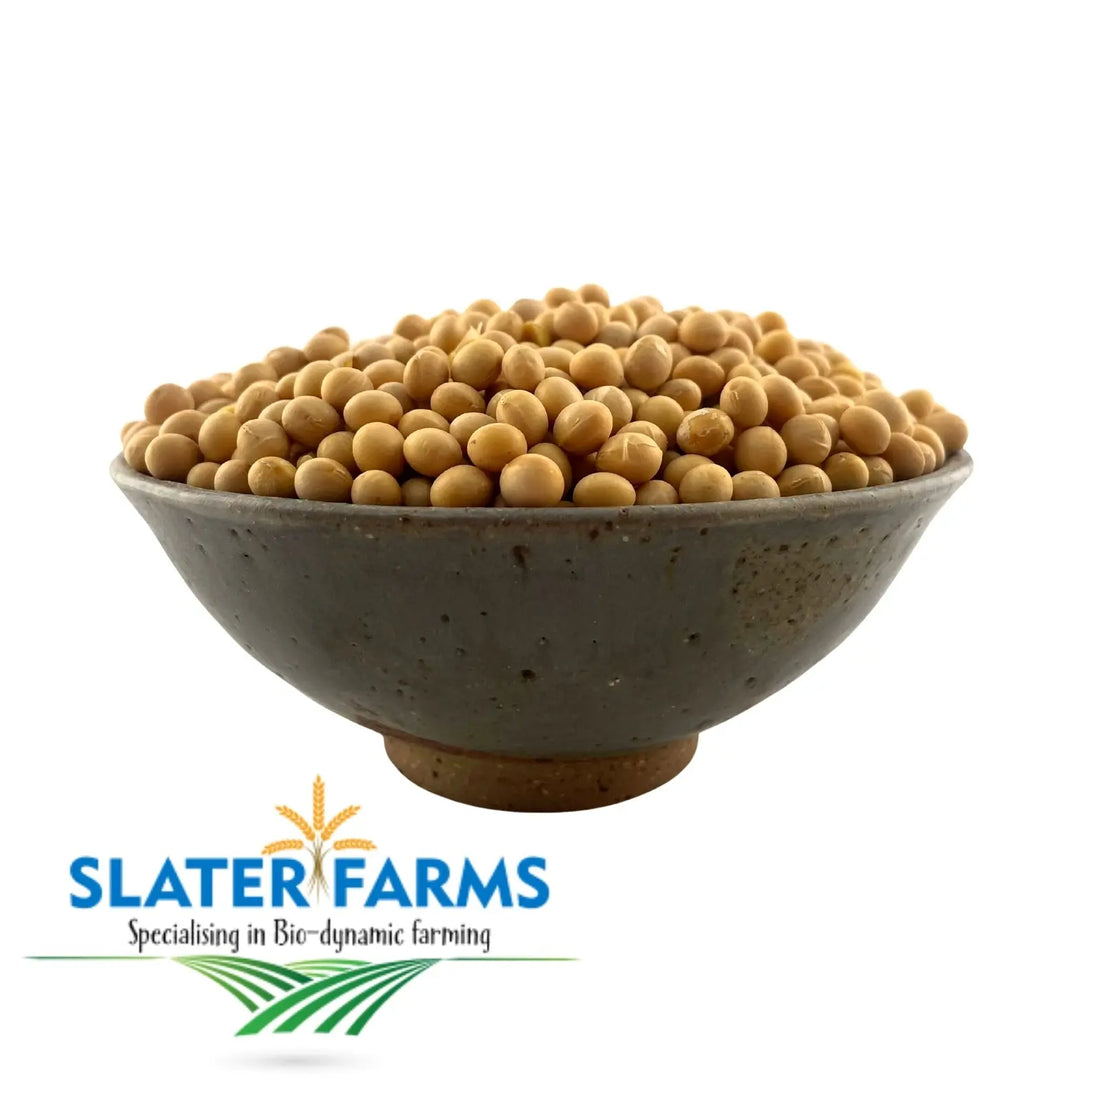 Soy Beans Biodynamic 25kg-Pulse & Grain-Slater Farms-Sovereign Foods-Rainfed Rice-Australian Grown Bulk Foods